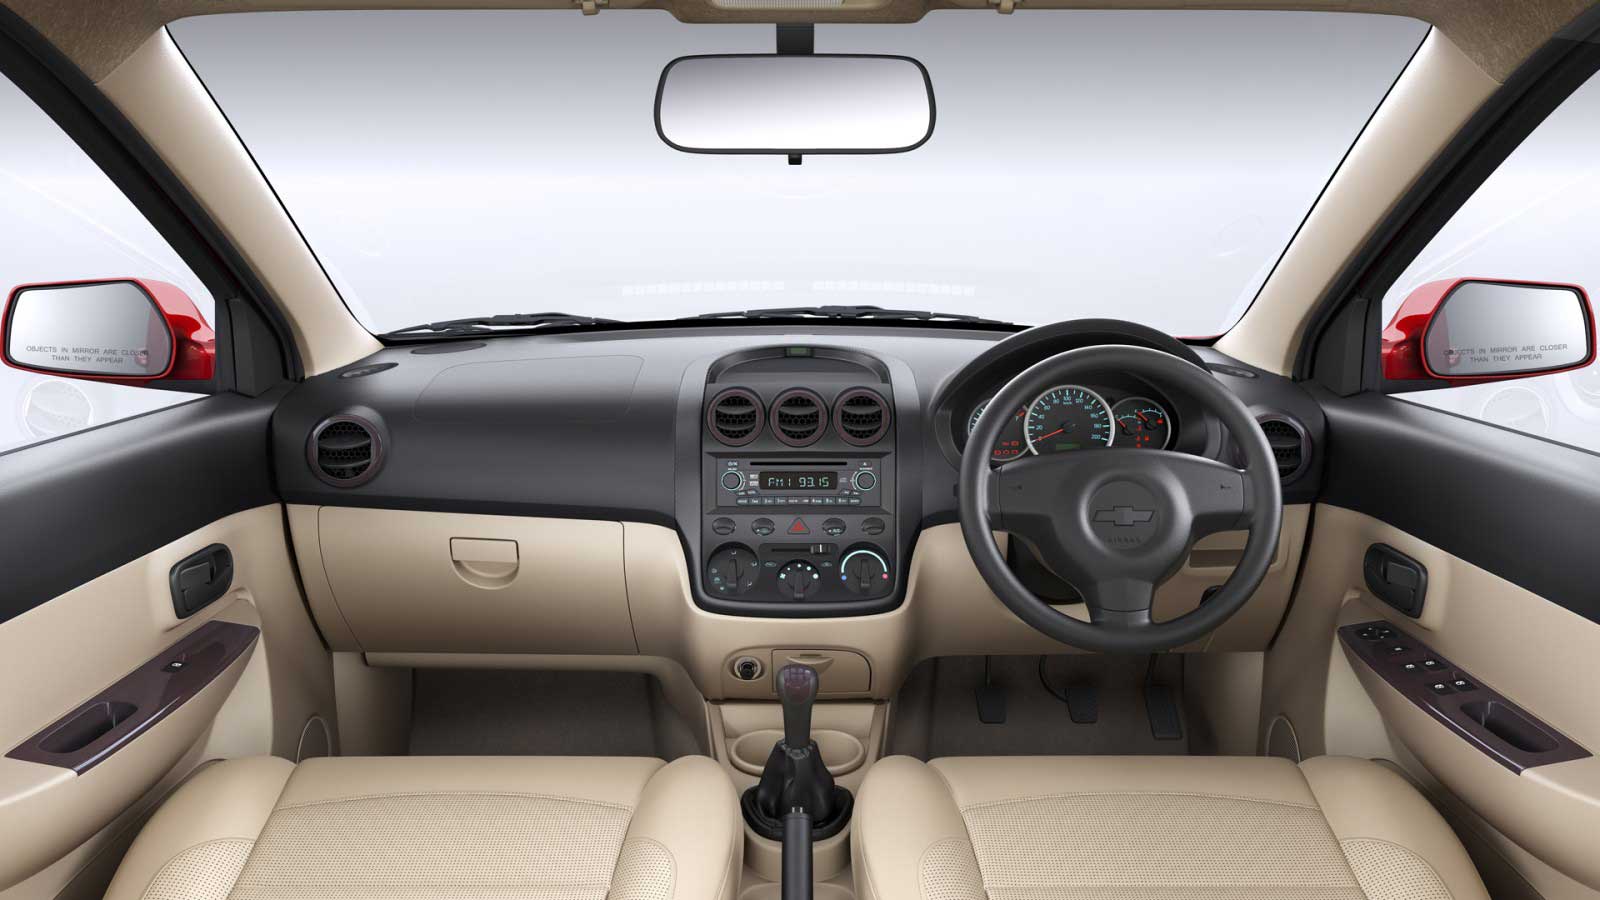 Chevrolet Enjoy 1.4 LT 8 STR Interior front view